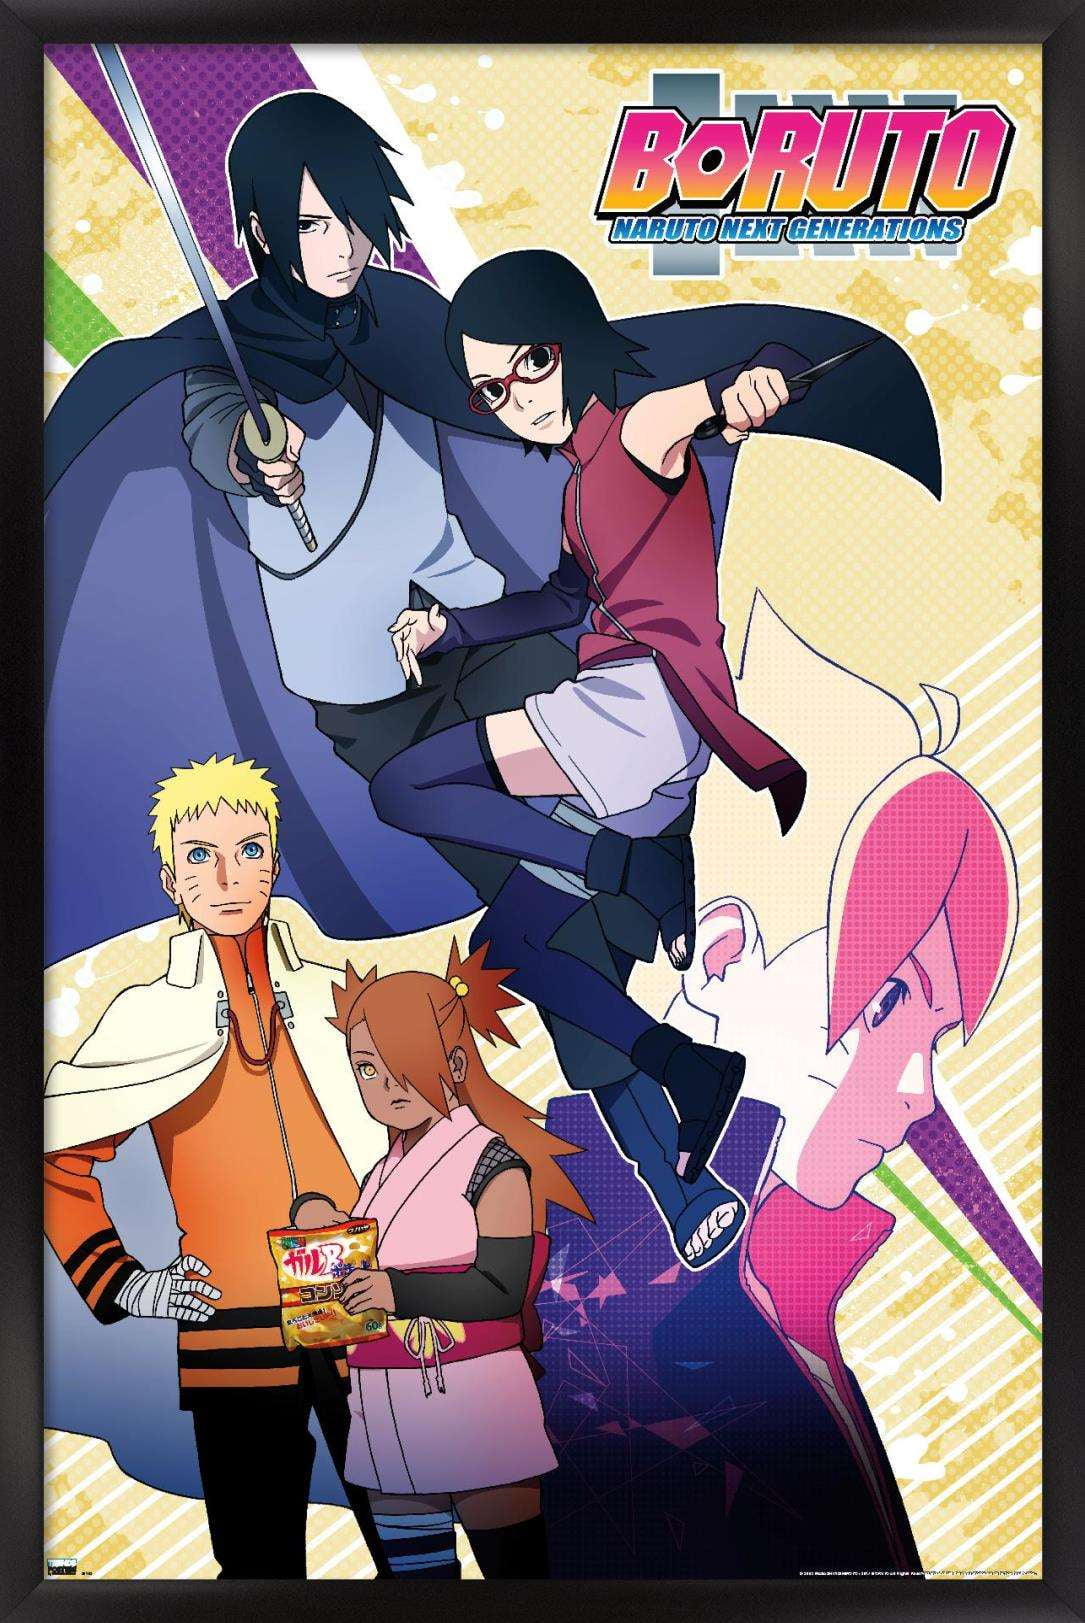 BORUTO: Naruto Next Generations Image by Studio Pierrot #2326974